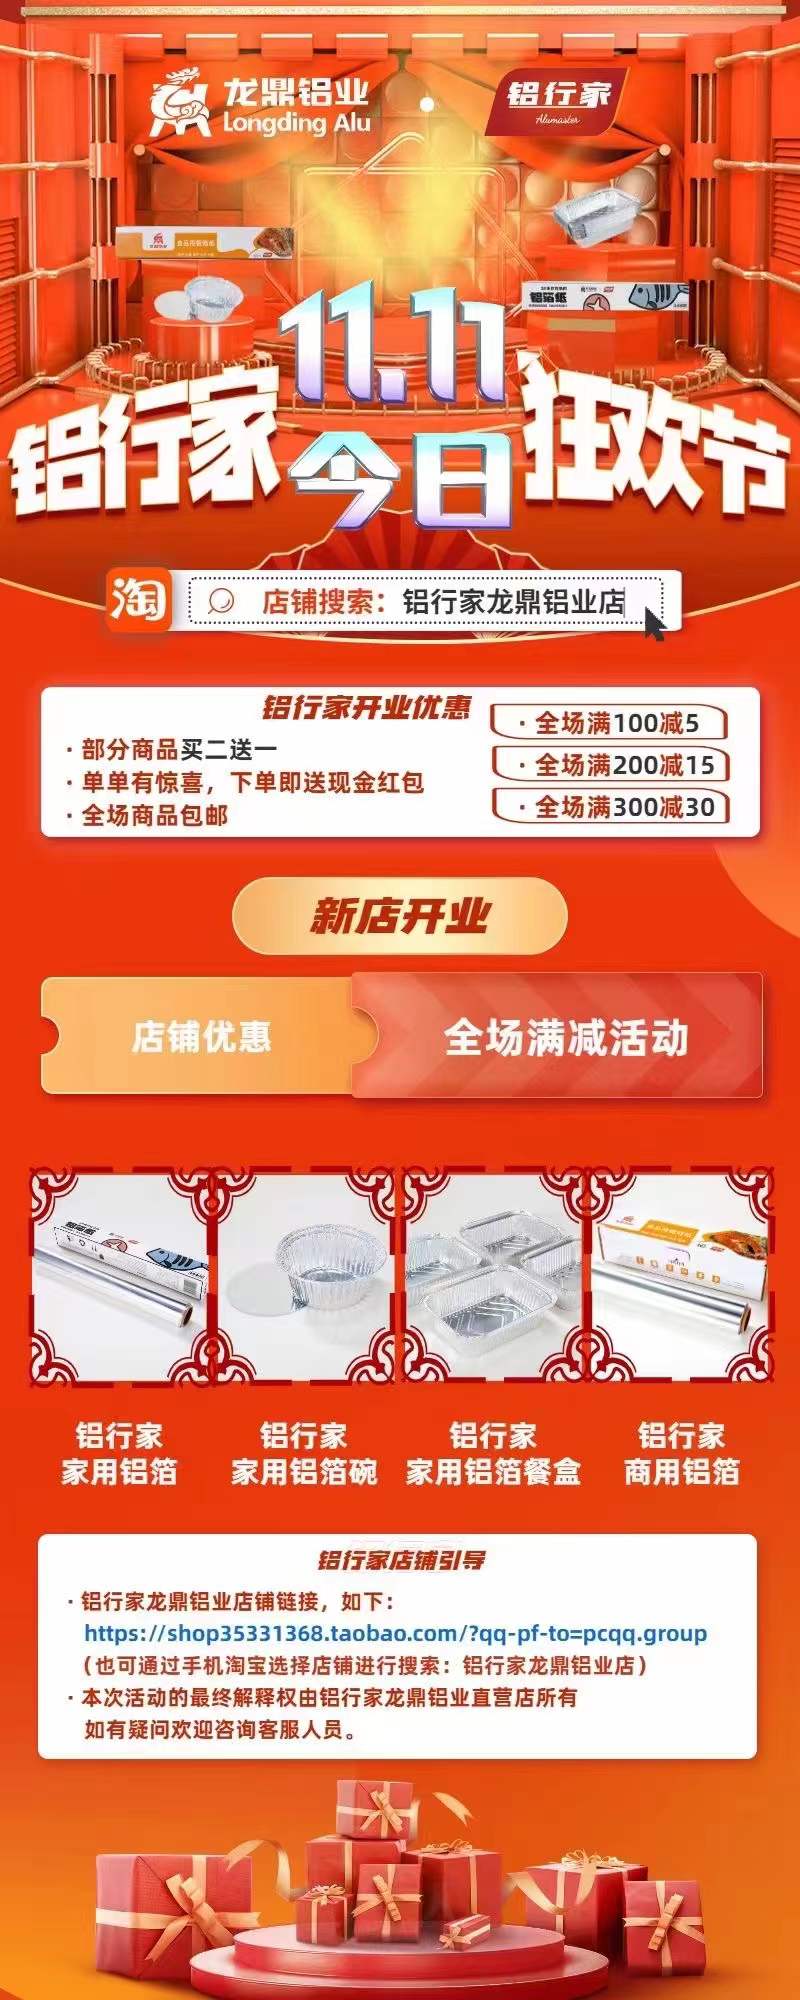 "Alumaster" Longding Aluminum Taobao Shop Officially Opened